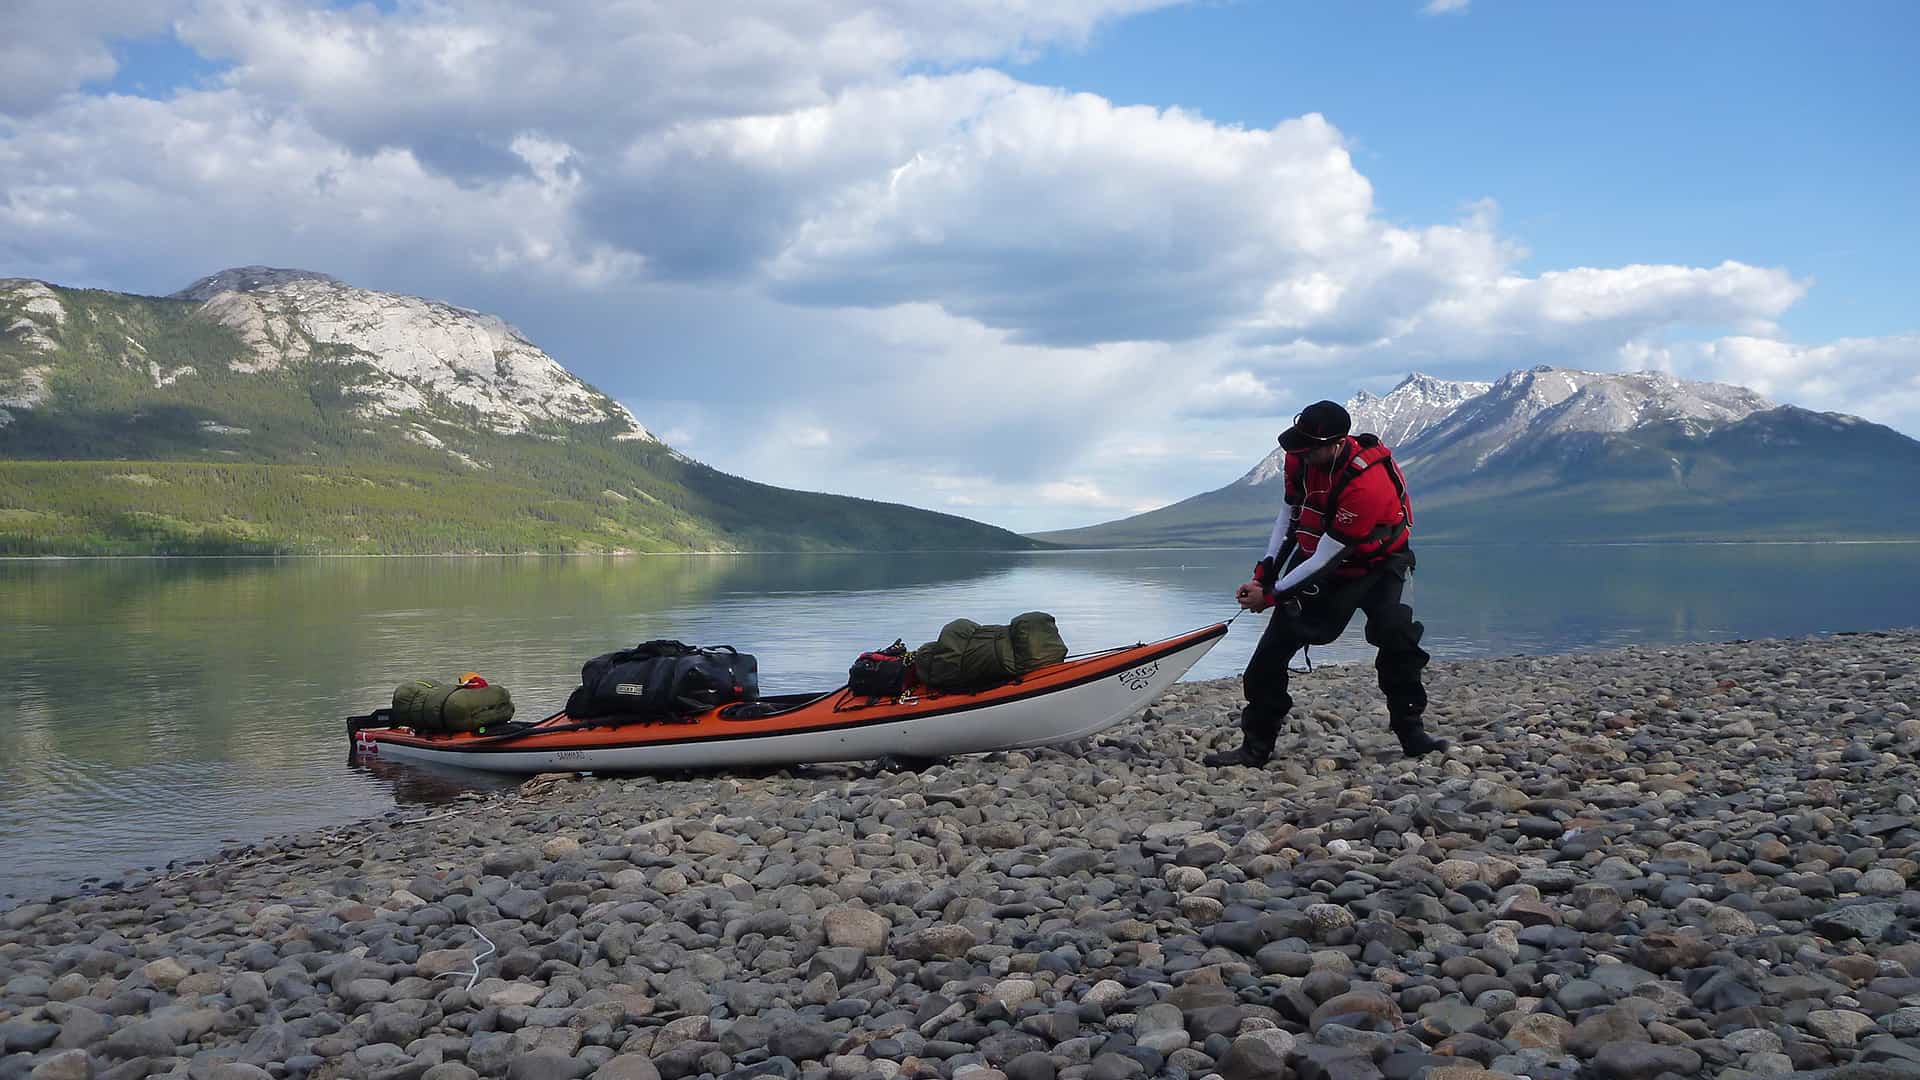  Yukon River, Eventyrlige Yukon, foredrag, Erik B. Jørgensen, trækker 